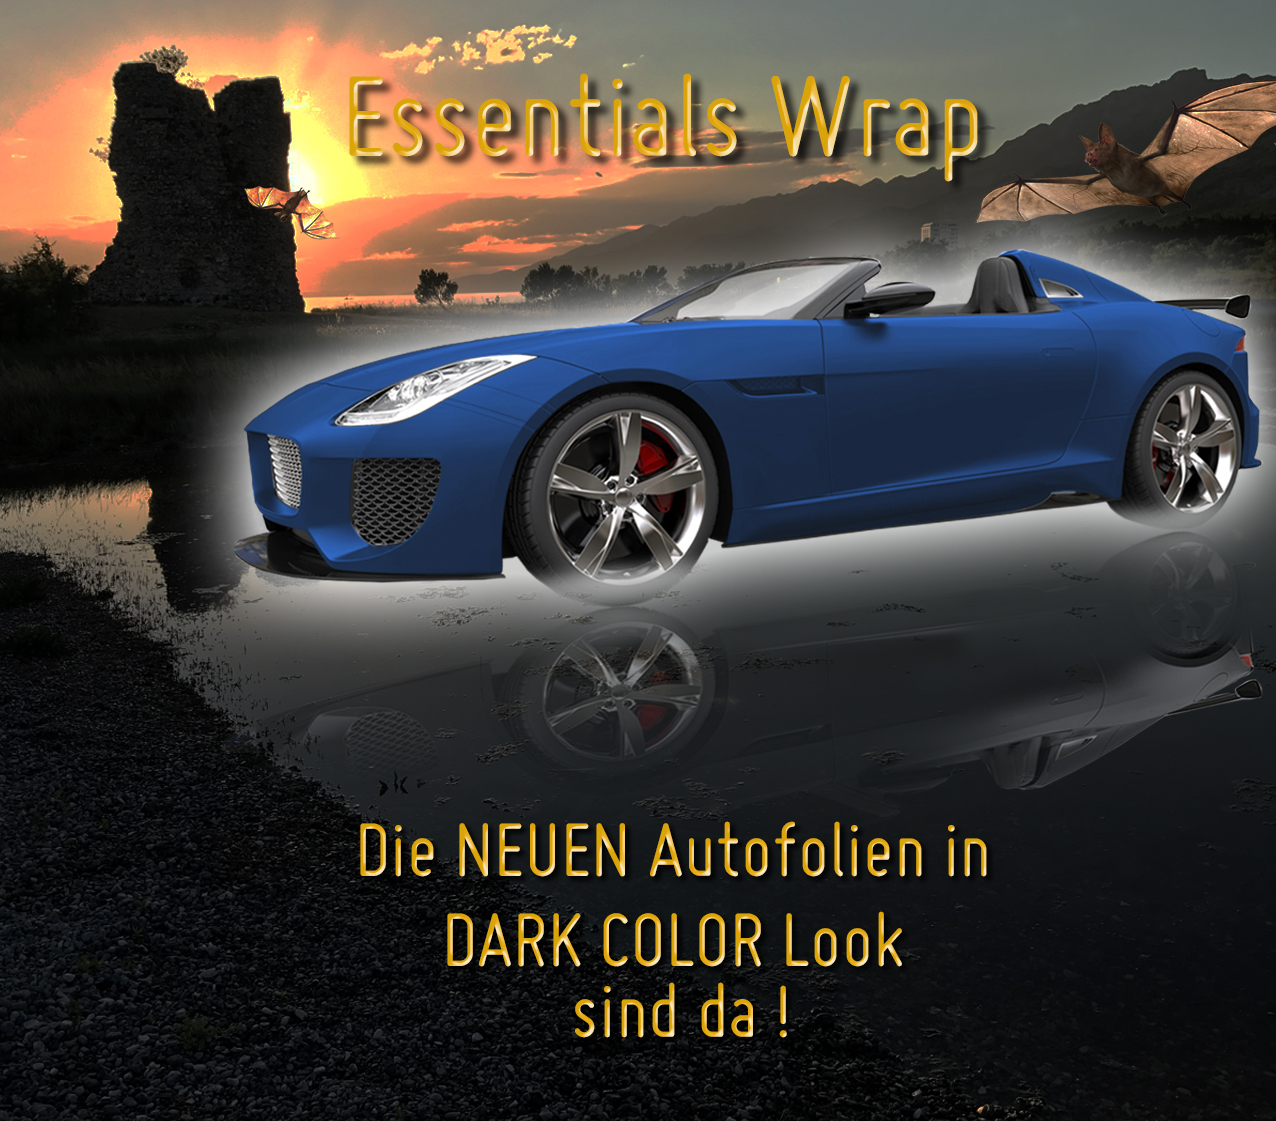 https://www.wegaswerbung-shop.de/media/image/5b/8b/39/Autofolie-Essentials-1-Wrap-Wegaswerbung-Shop-Blog.jpg